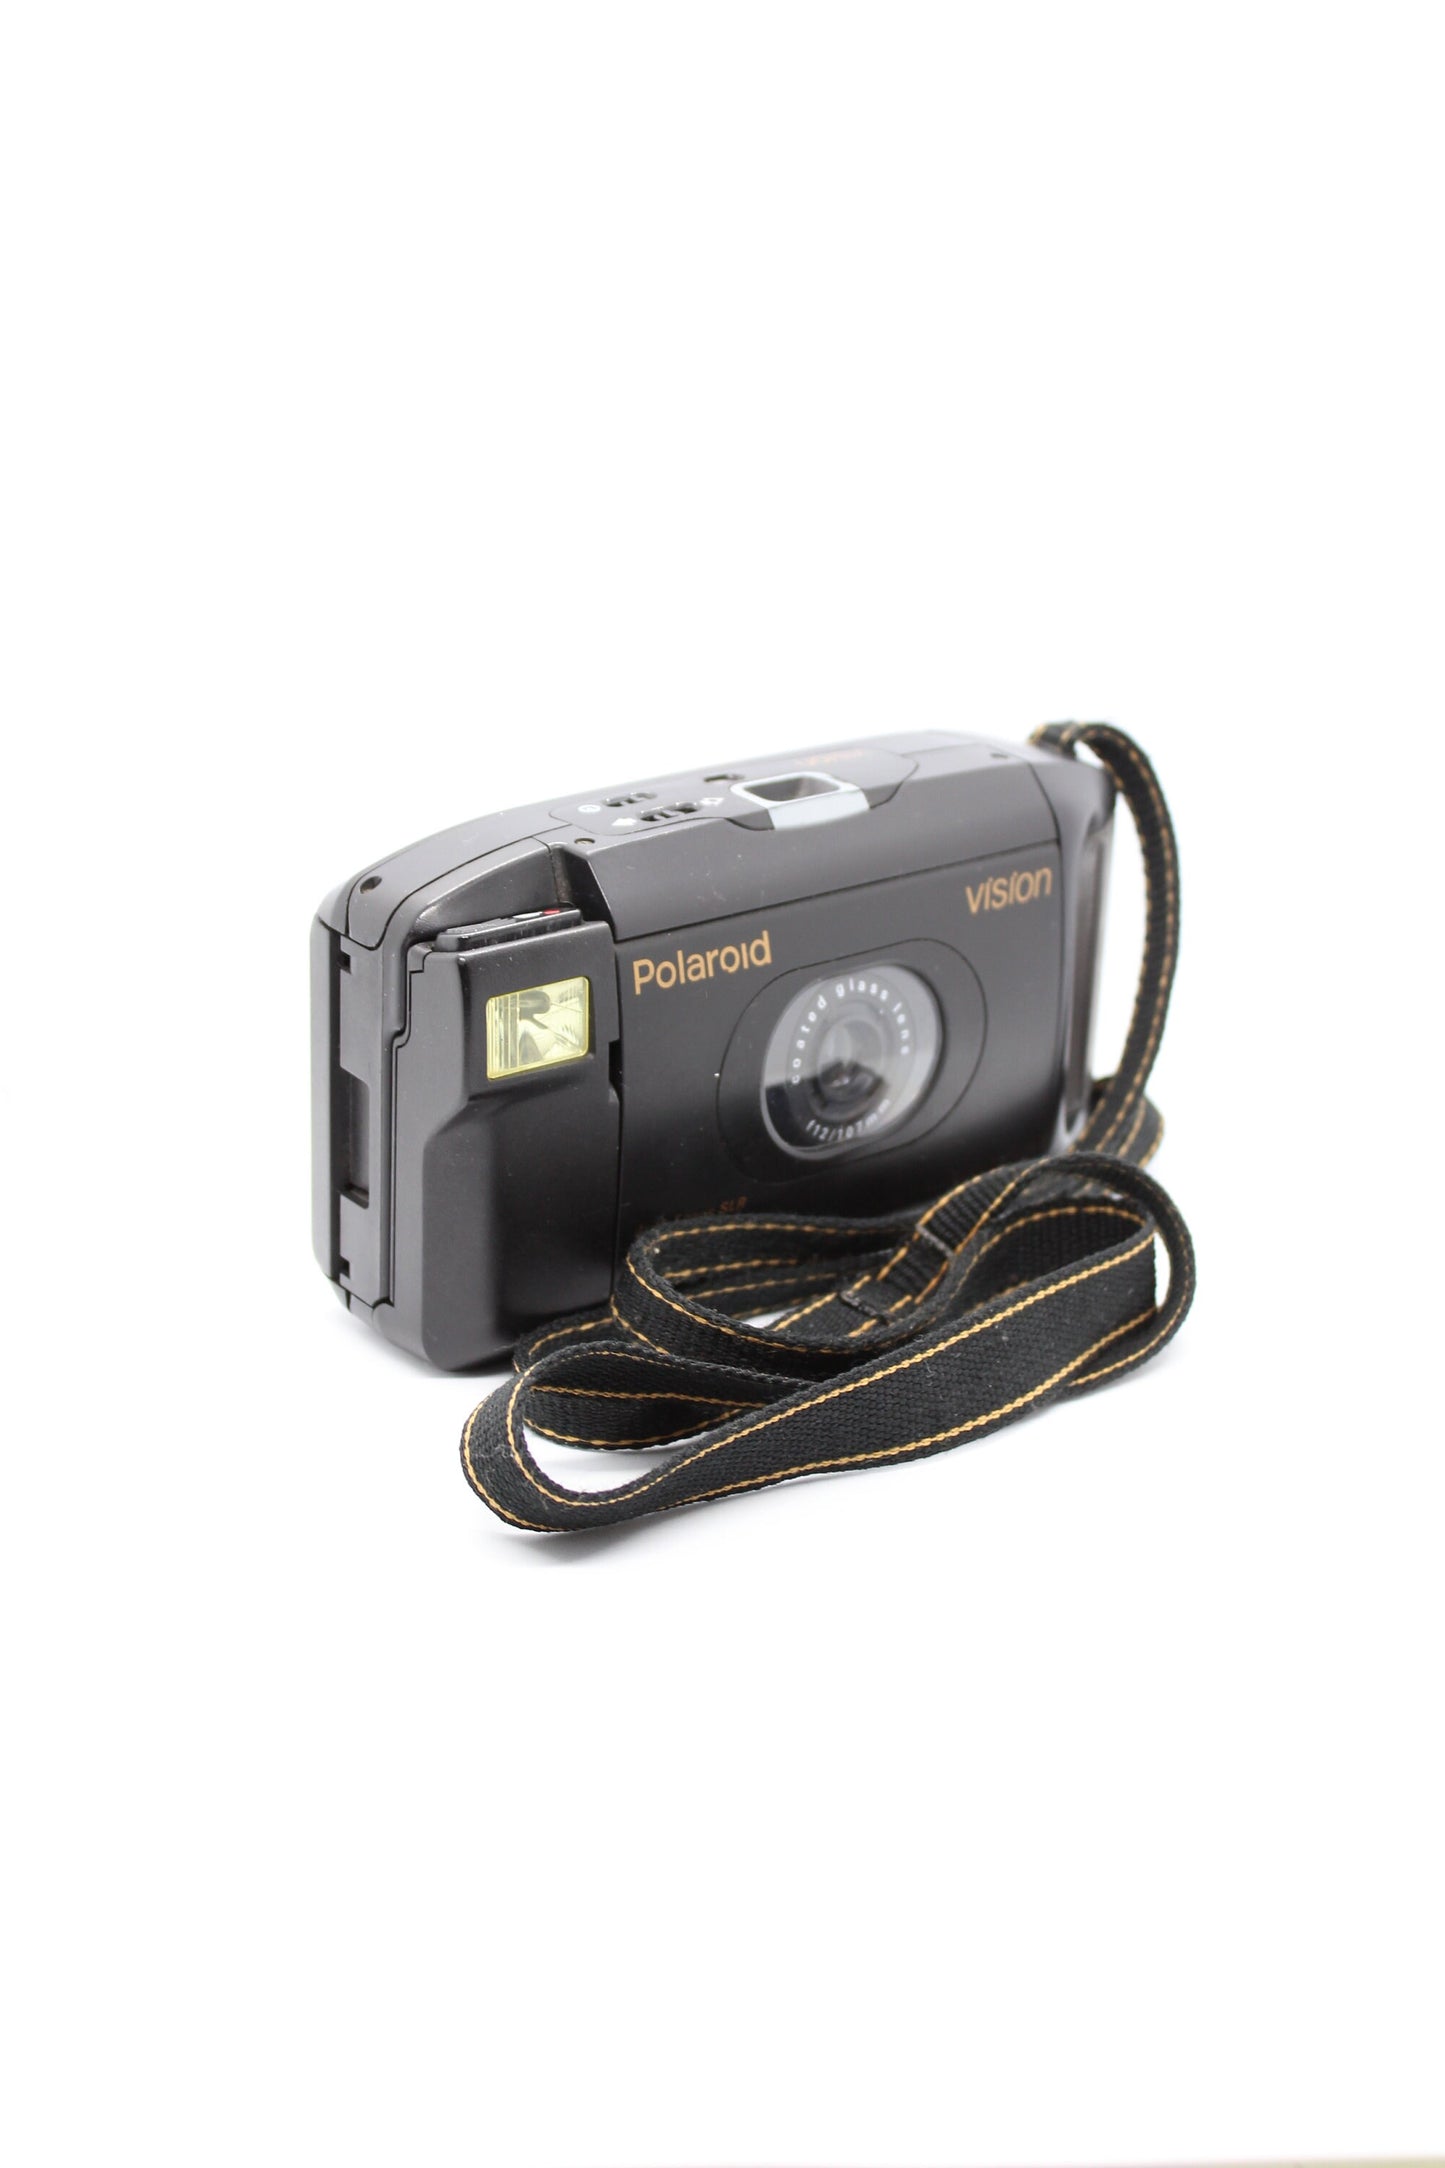 Polaroid Vision Camera